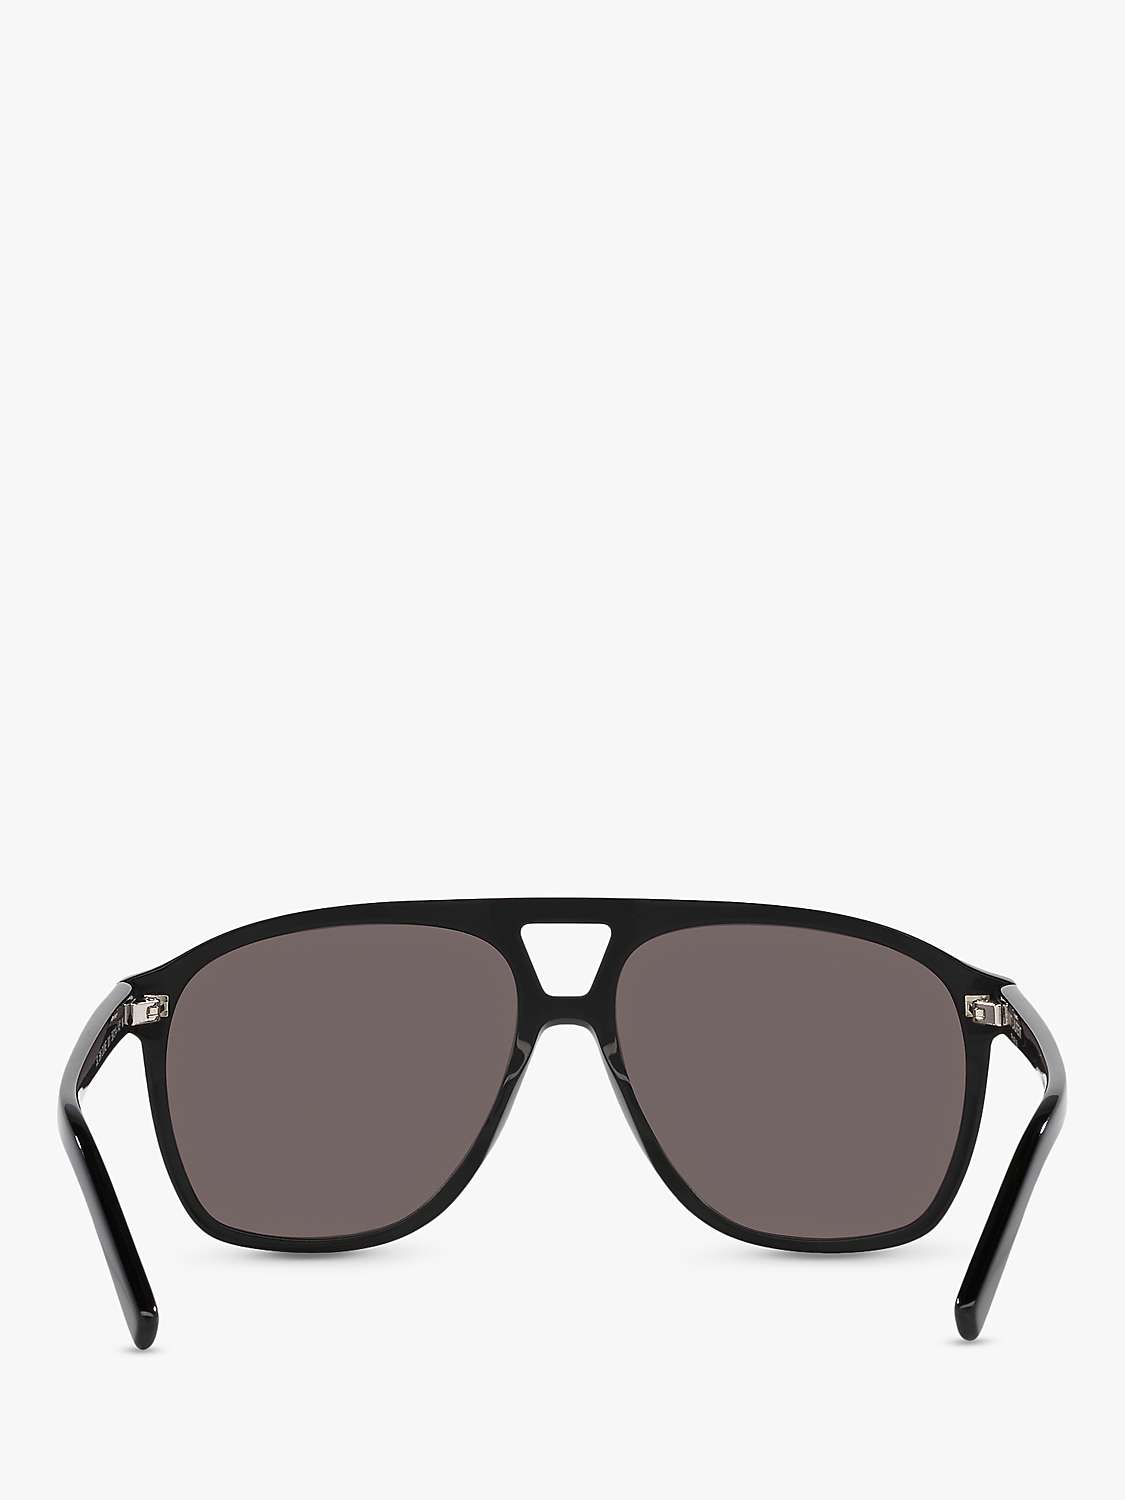 Buy Yves Saint Laurent YS000473 Women's Oval Sunglasses, Black Online at johnlewis.com